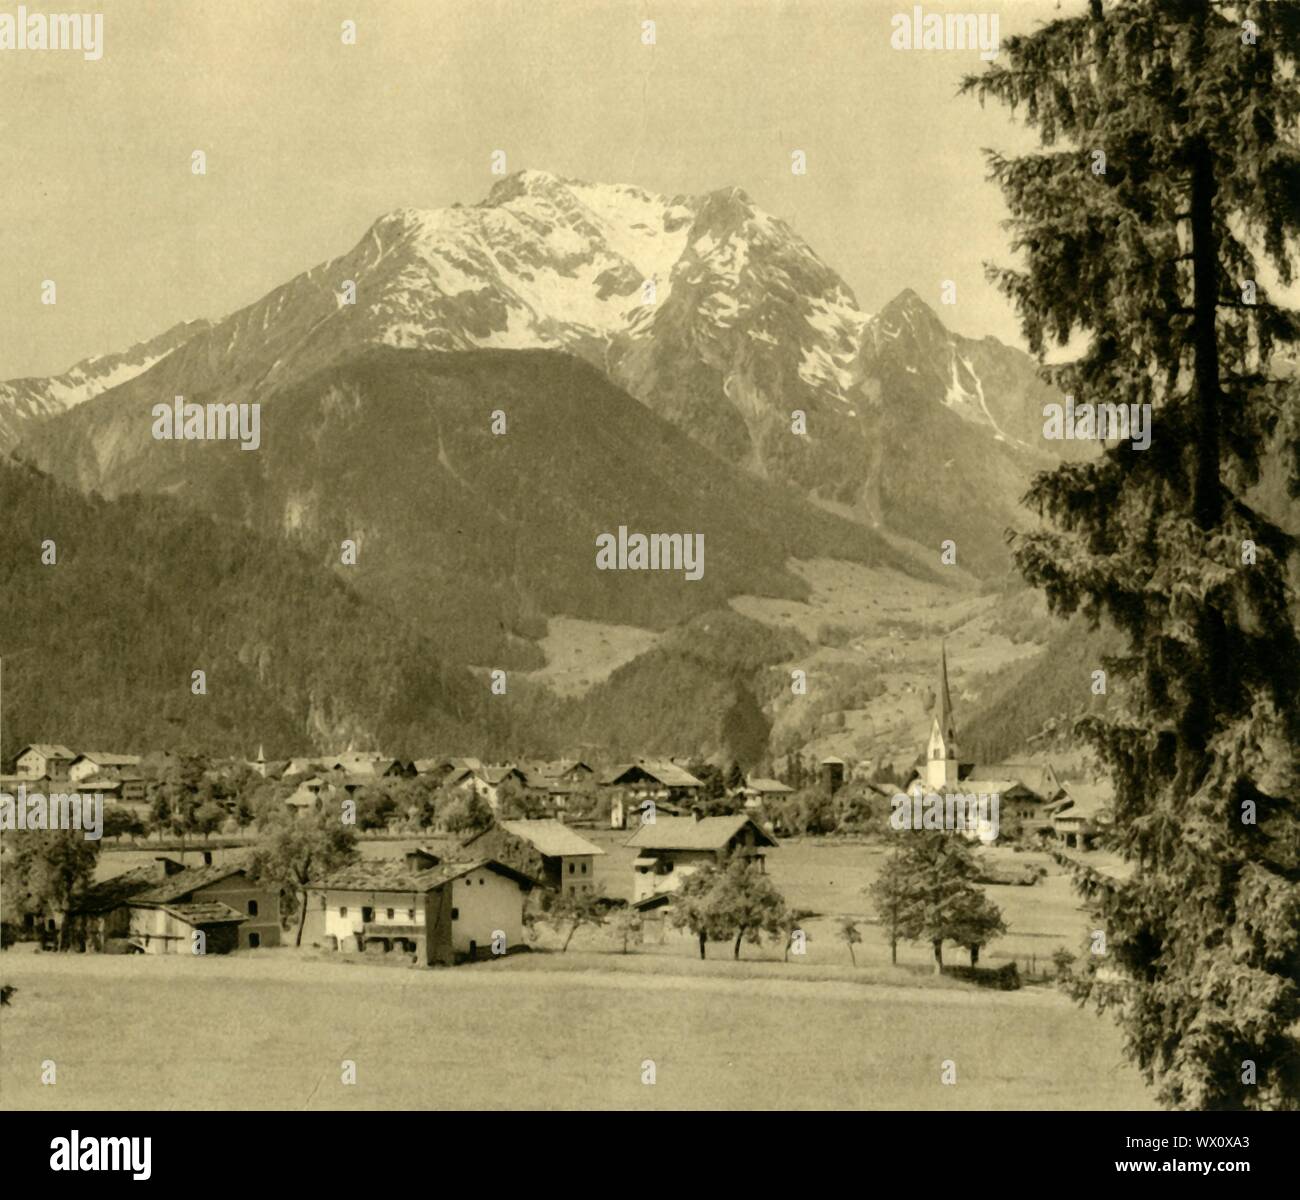 Mayrhofen, Zillertal Austria, c1935. Vista della città di Mayrhofen nel fiume Ziller valley, Tirolo. Da "&#xd6;sterreich - Land und Volk", (l'Austria, la terra e la gente). [R. Lechner (Wilhelm M&#xfc;iler), Vienna, c1935] Foto Stock